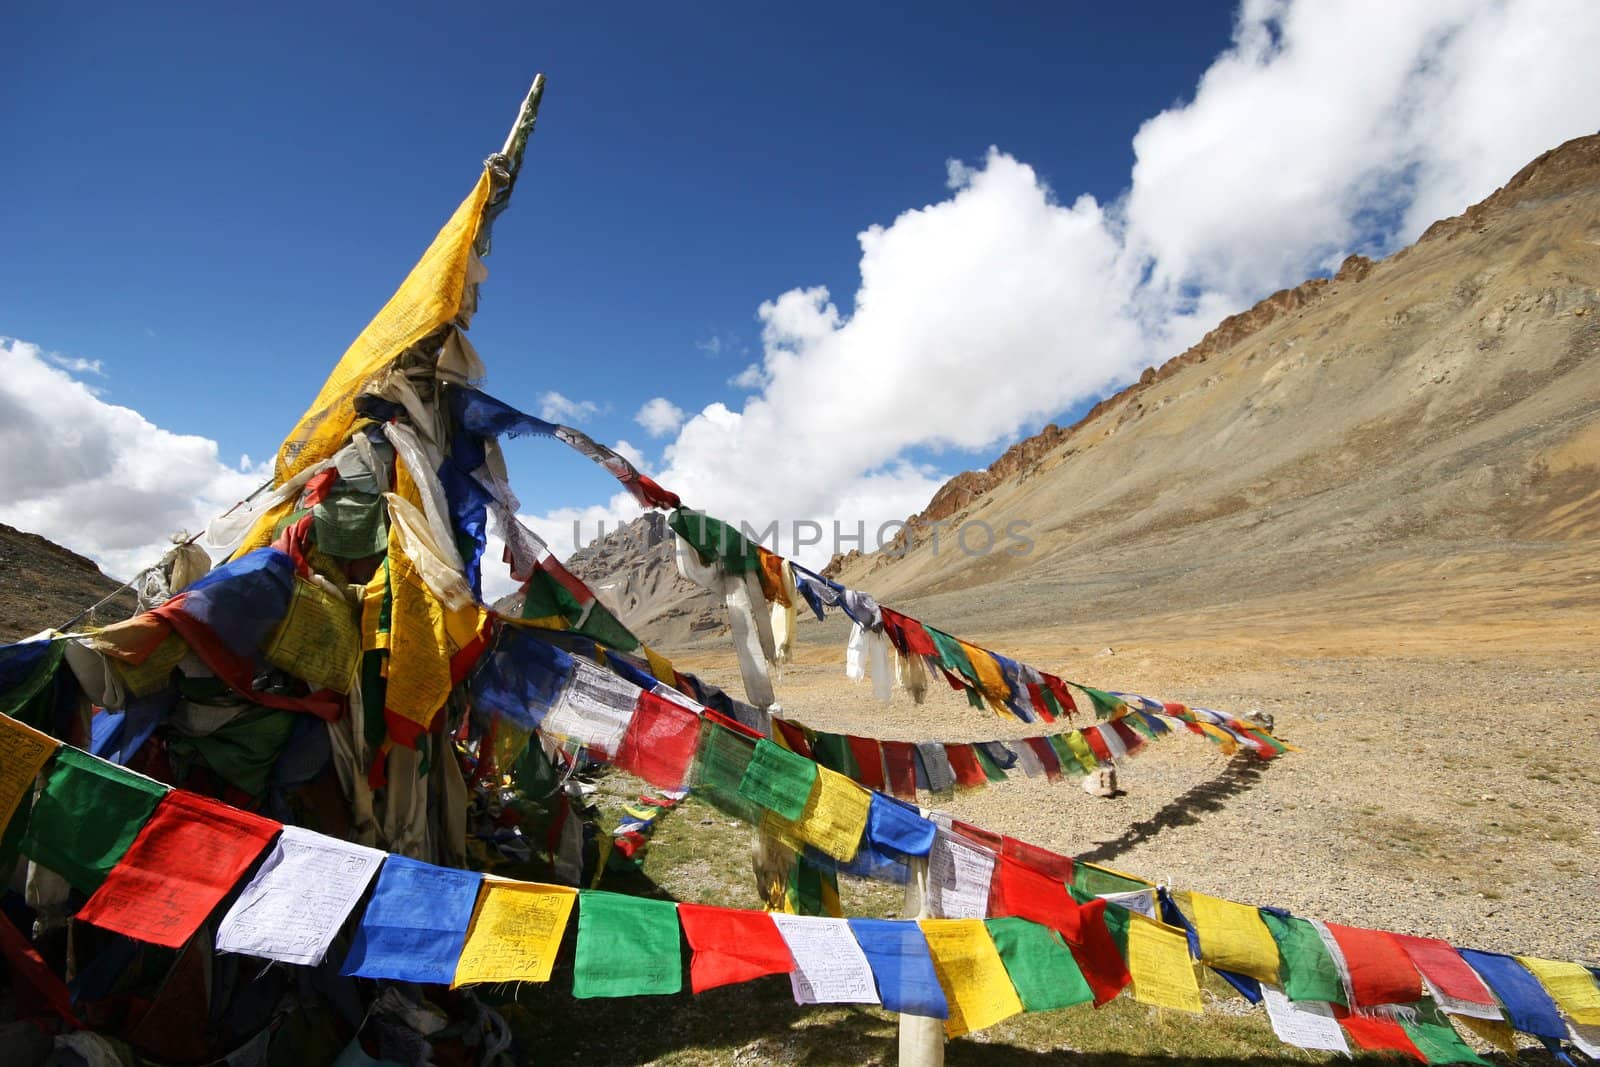 Plenty of colorful Buddhist prayer flags by Marko5